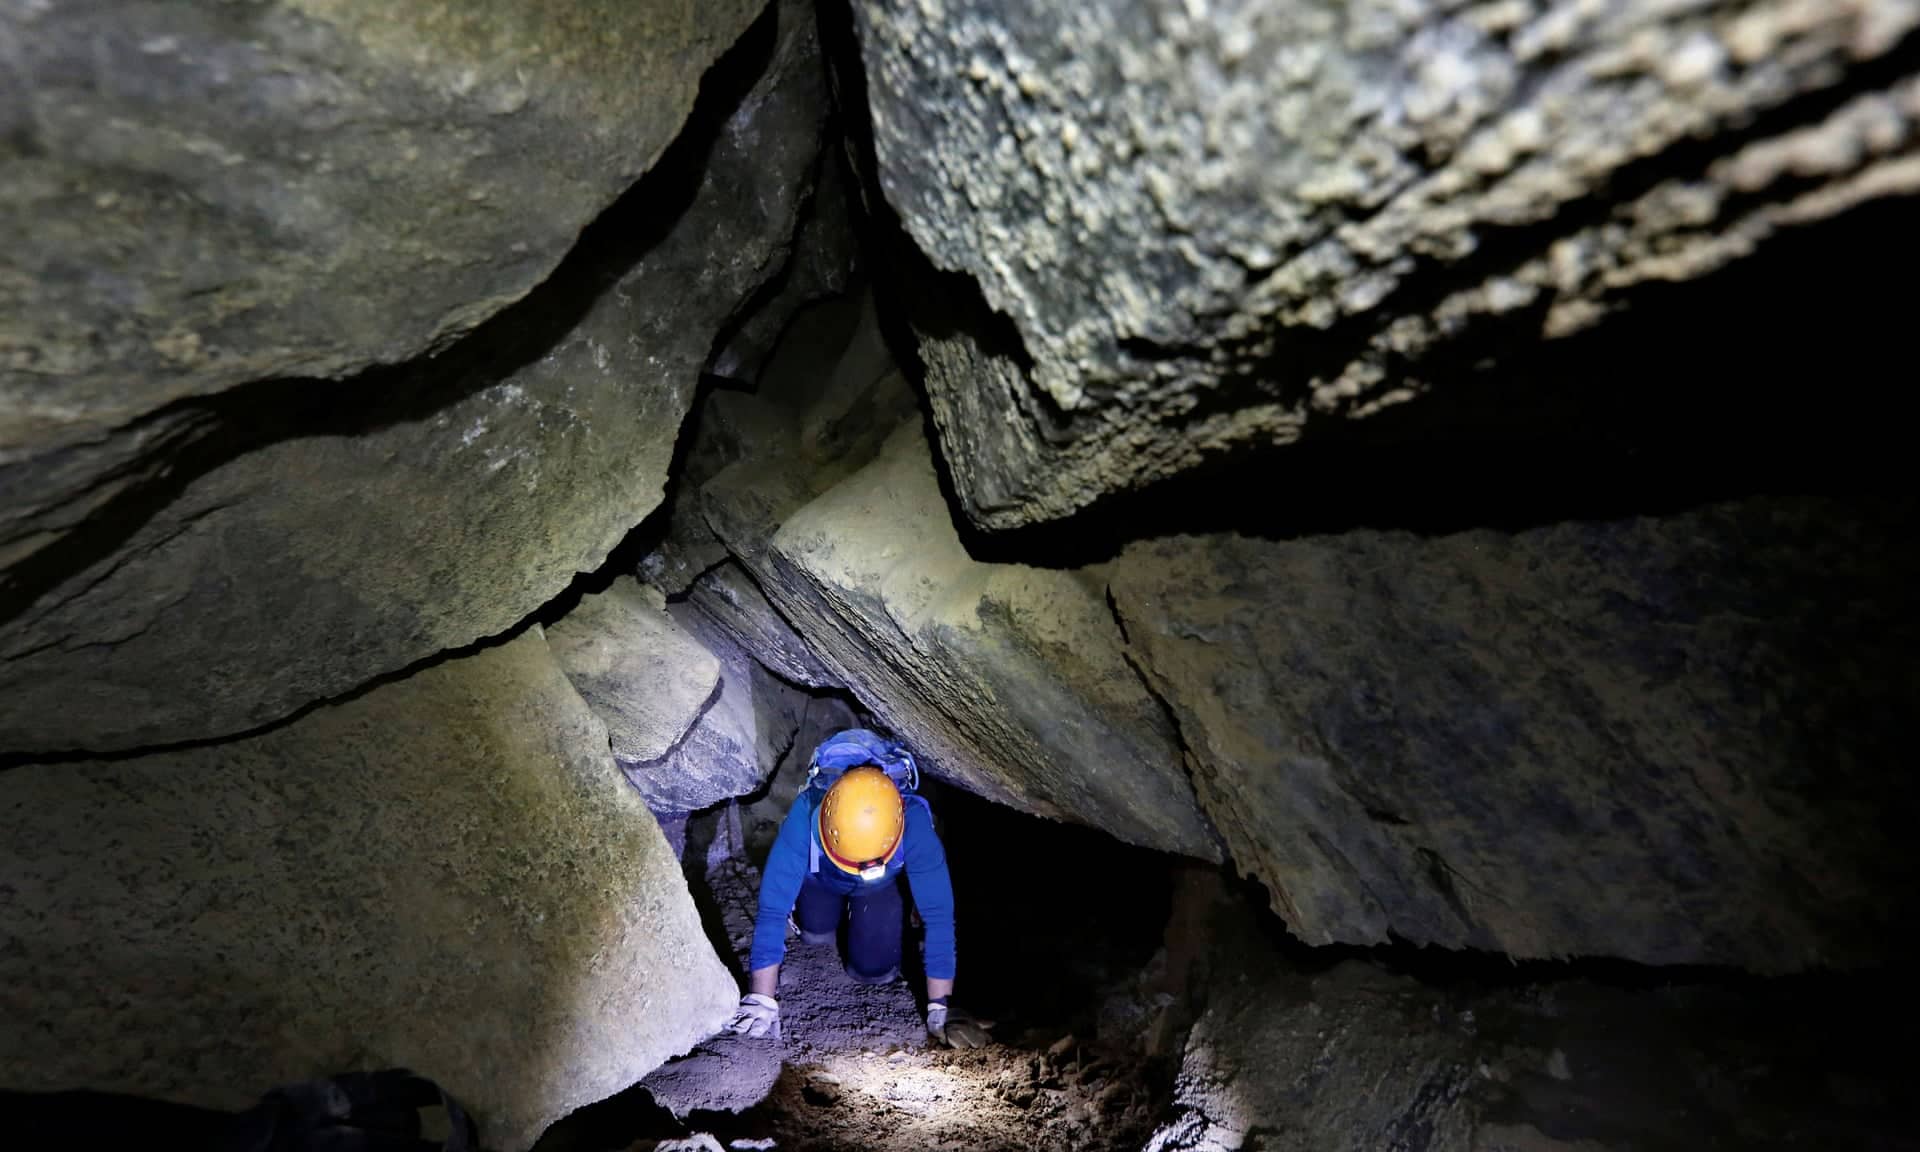 Malham Cave Salt cave 2 @paperslife